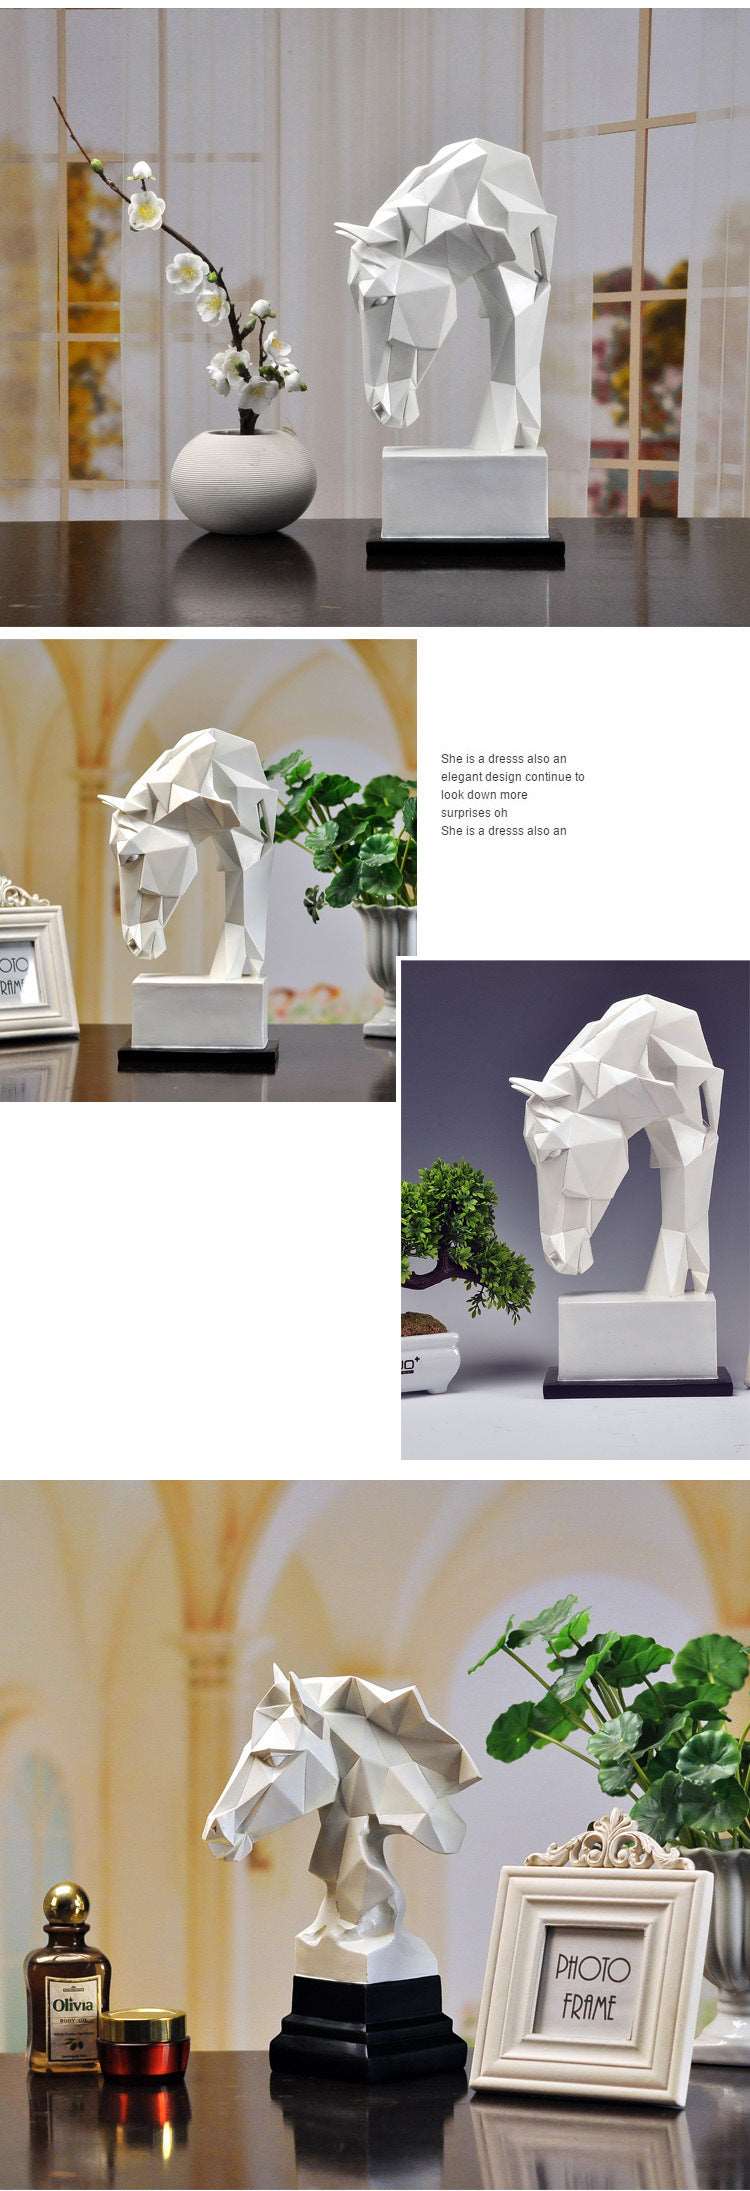 Galleria369-"Statues White Horse Head Statues"